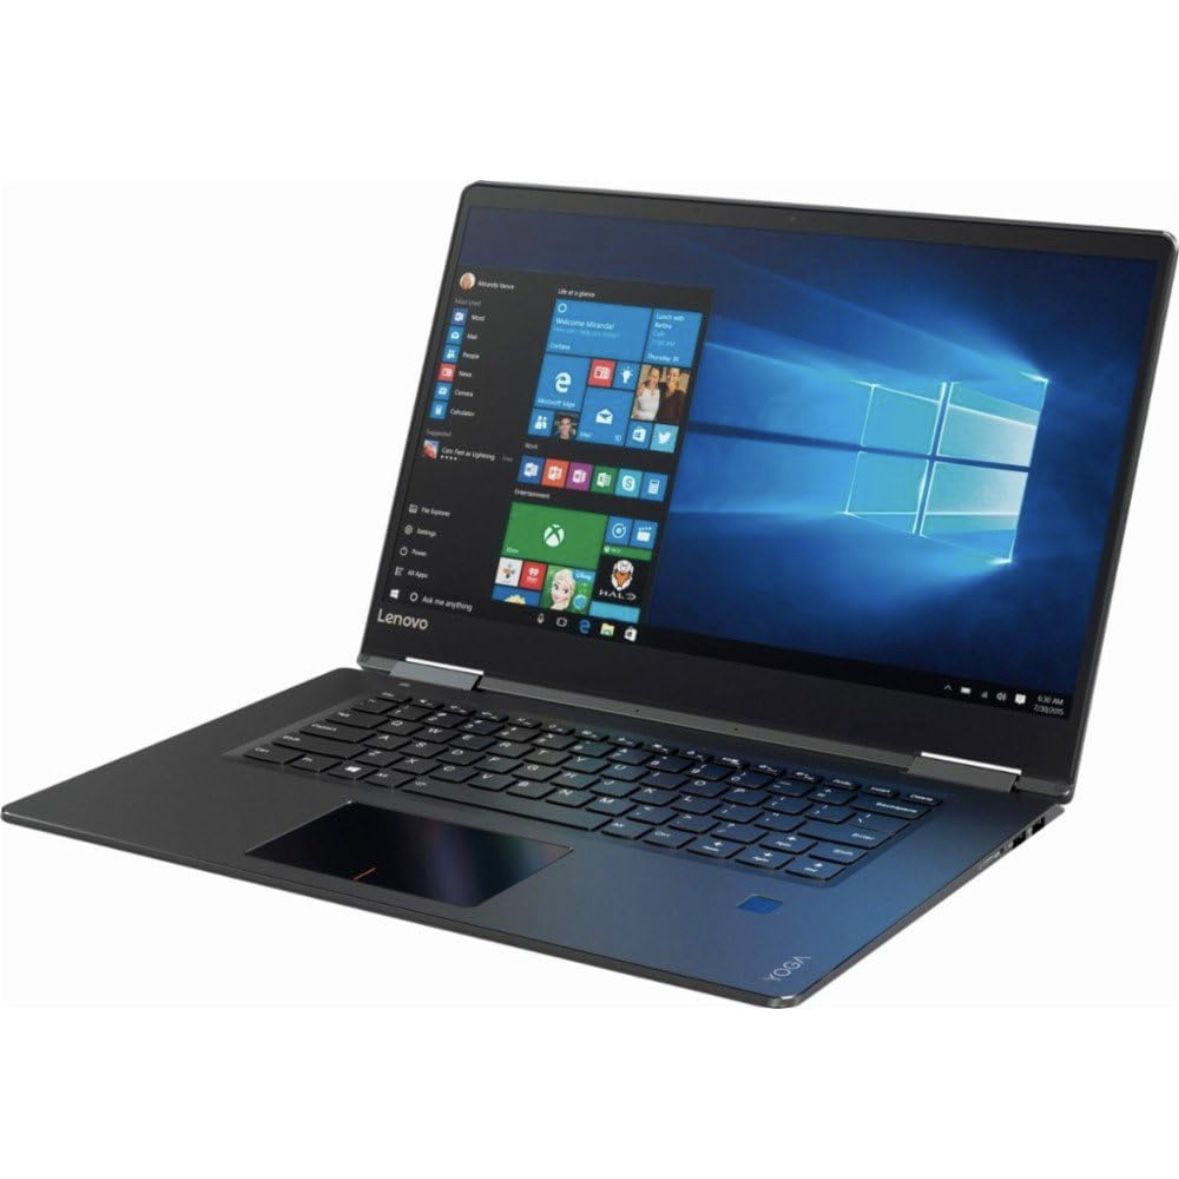 Lenovo Yoga Laptop 710-15 - 15.6"